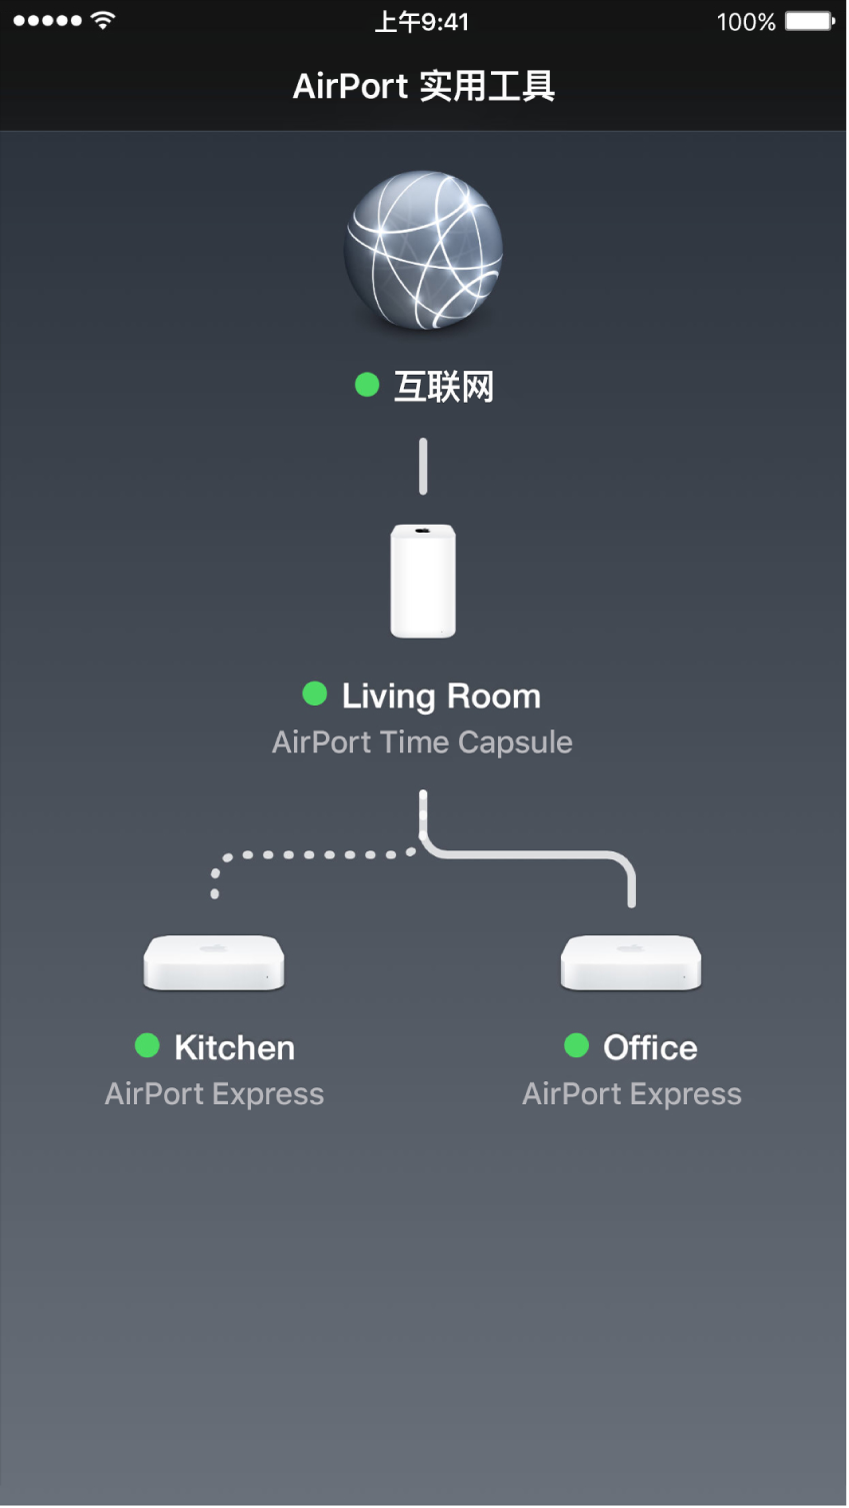 iOS 版“AirPort 实用工具”中的图形视图。